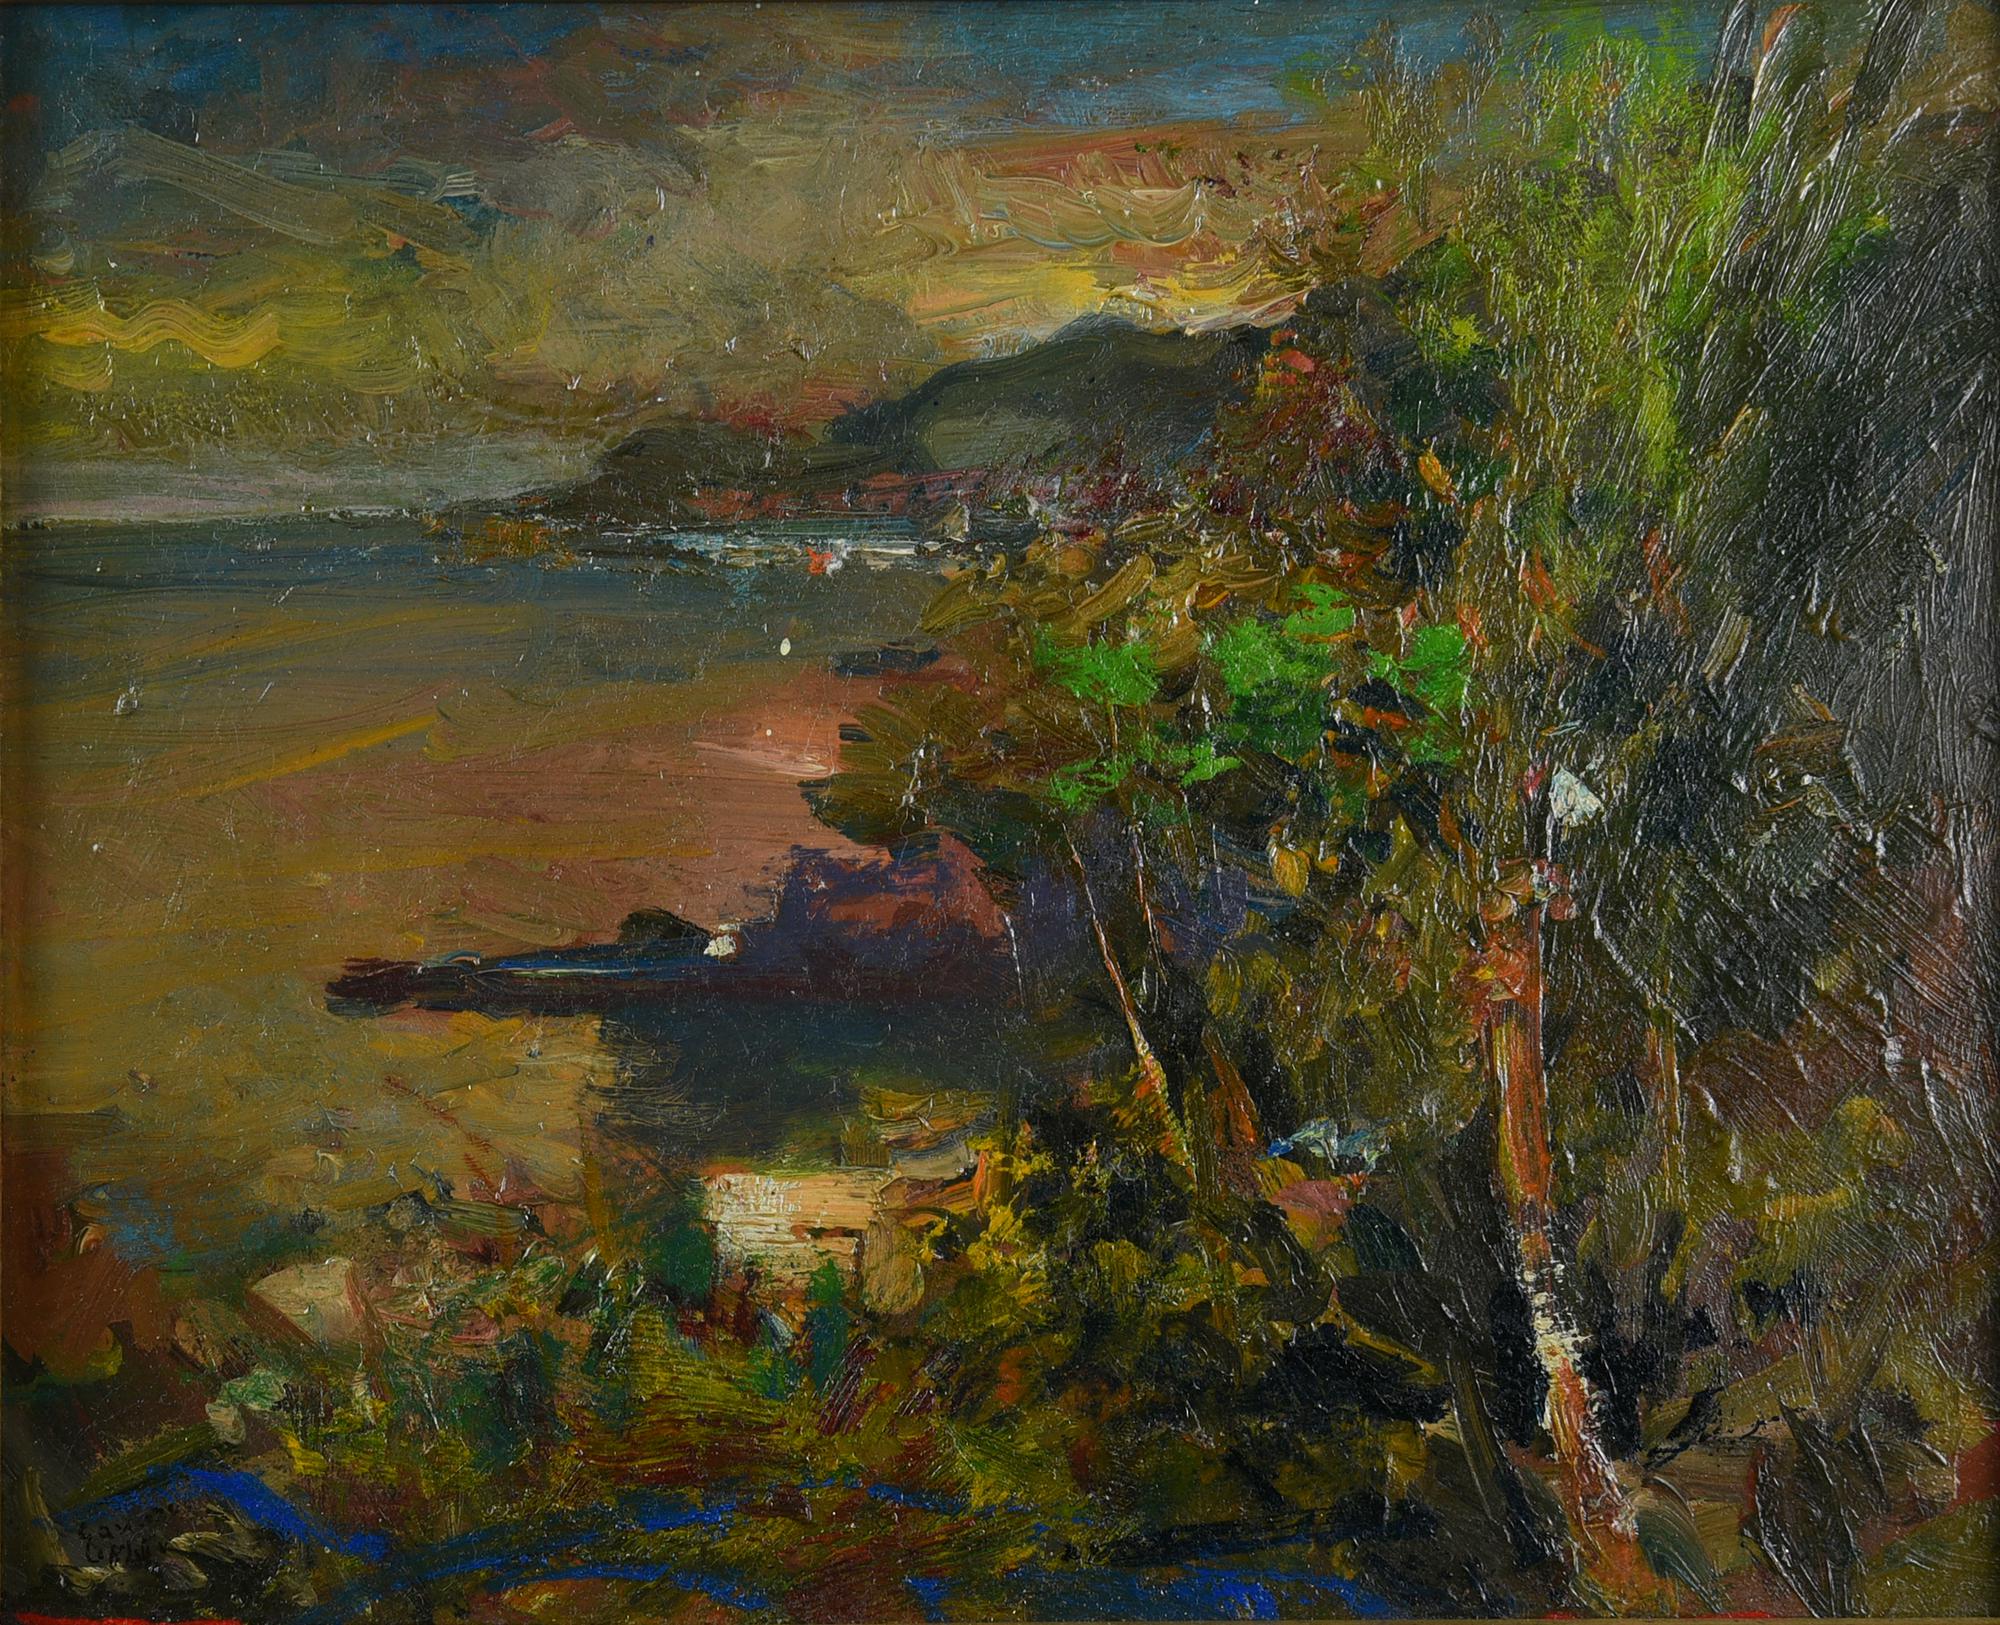 Giuseppe Casciaro (1863 - 1941) PAESAGGIO olio su tavola, cm 26x31,5